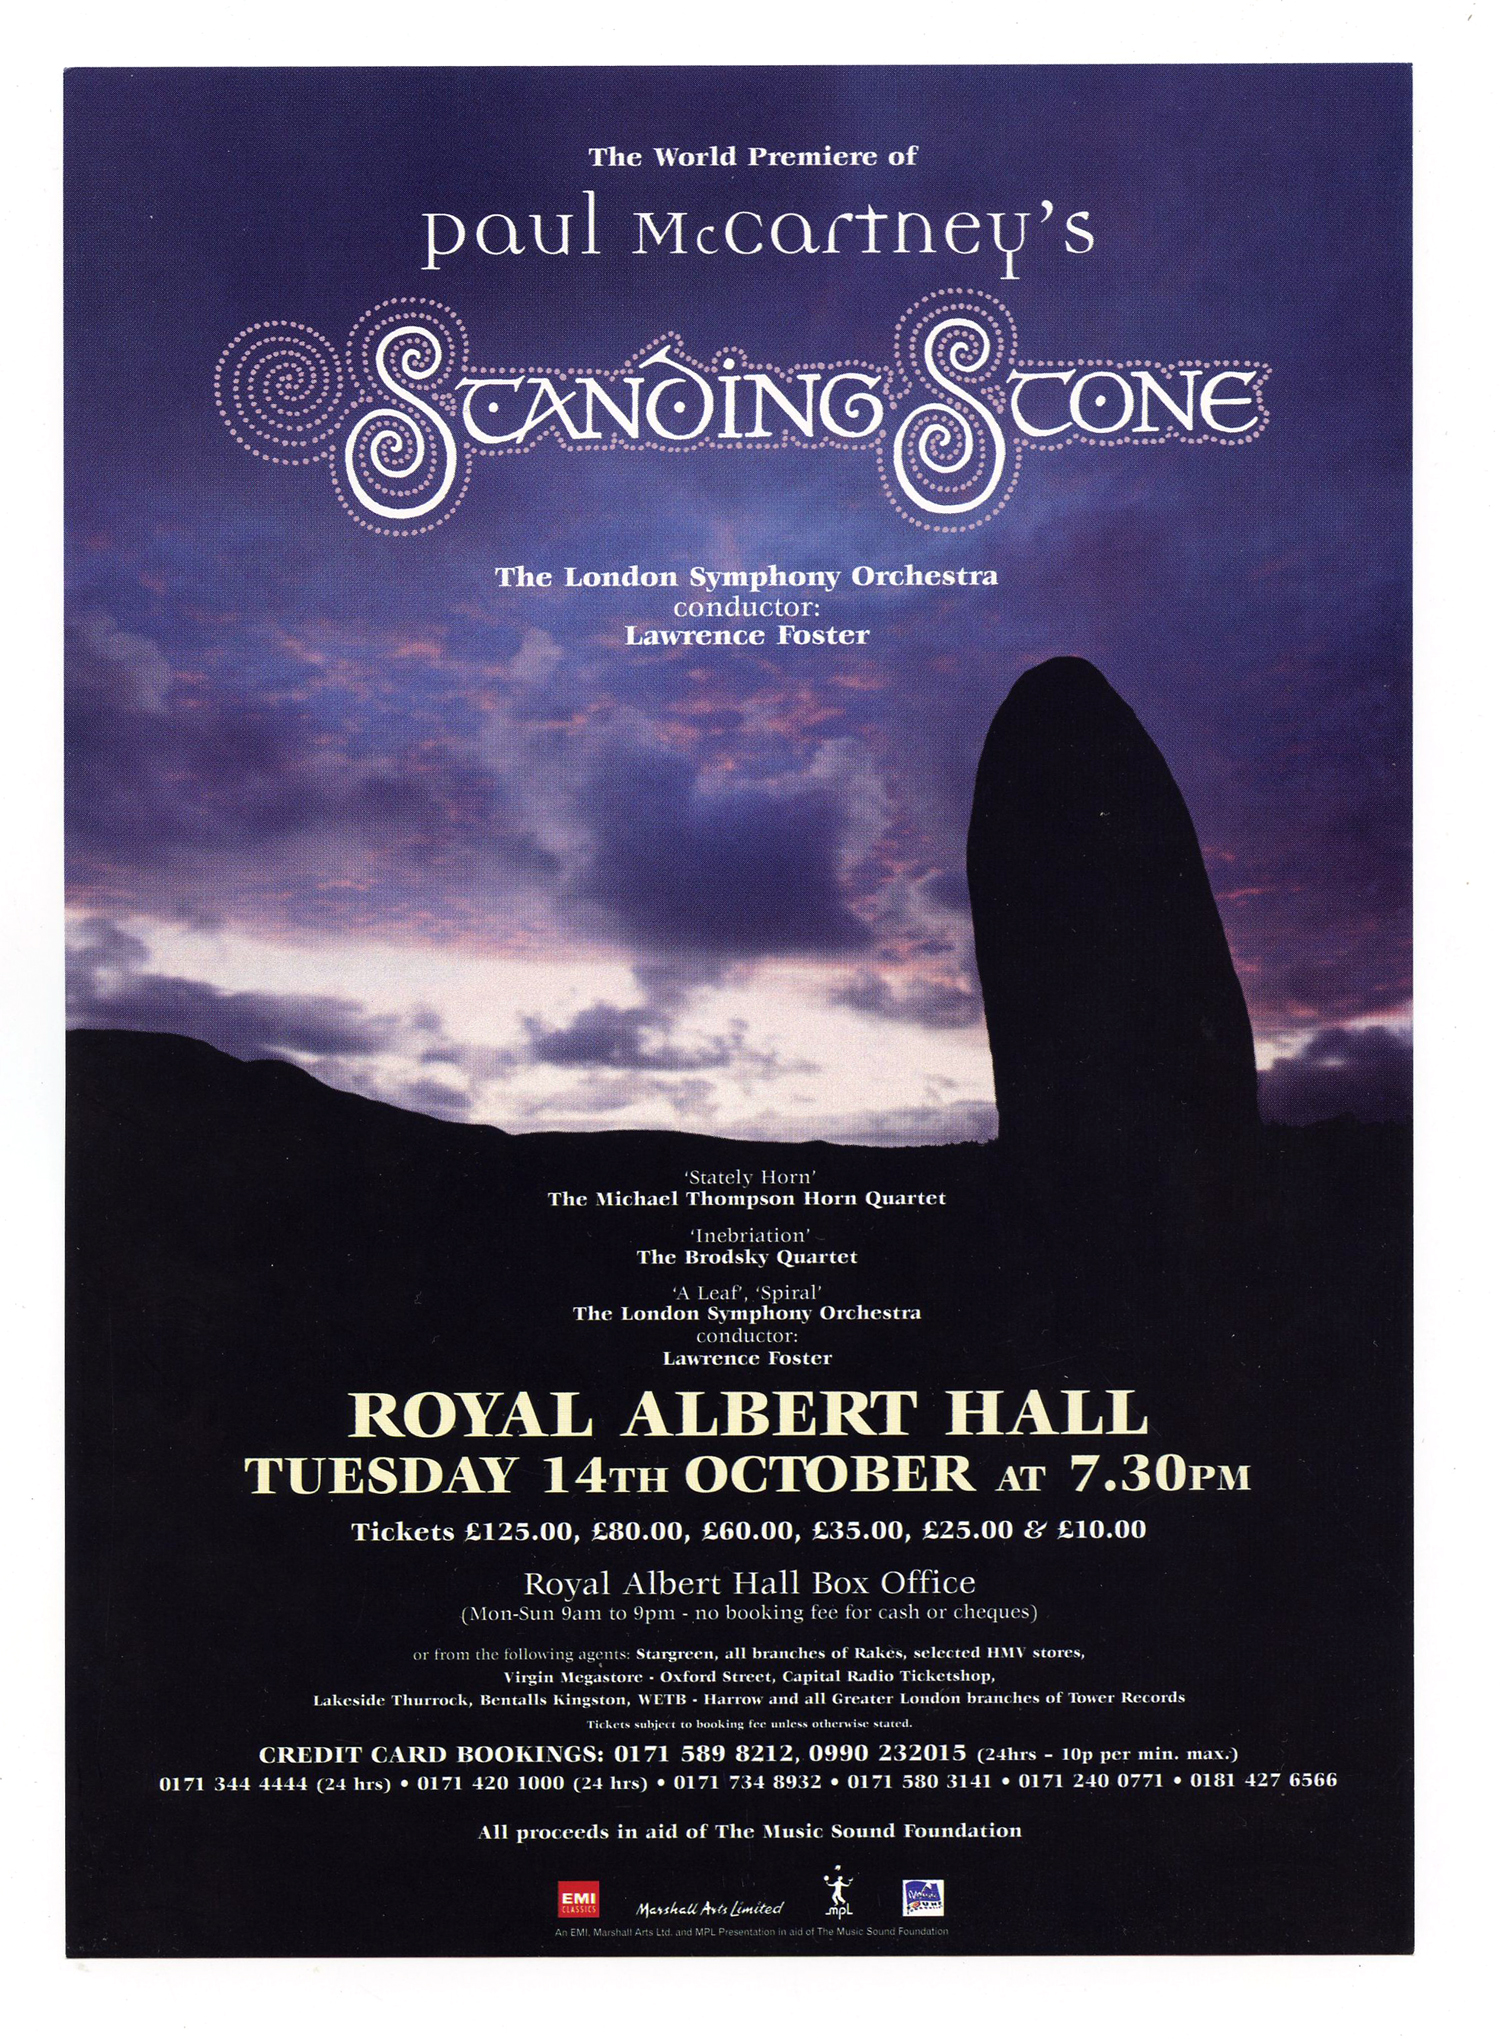 Paul McCartney Handbill Standing Stone 1997 Oct 14 Royal Albert Hall London UK